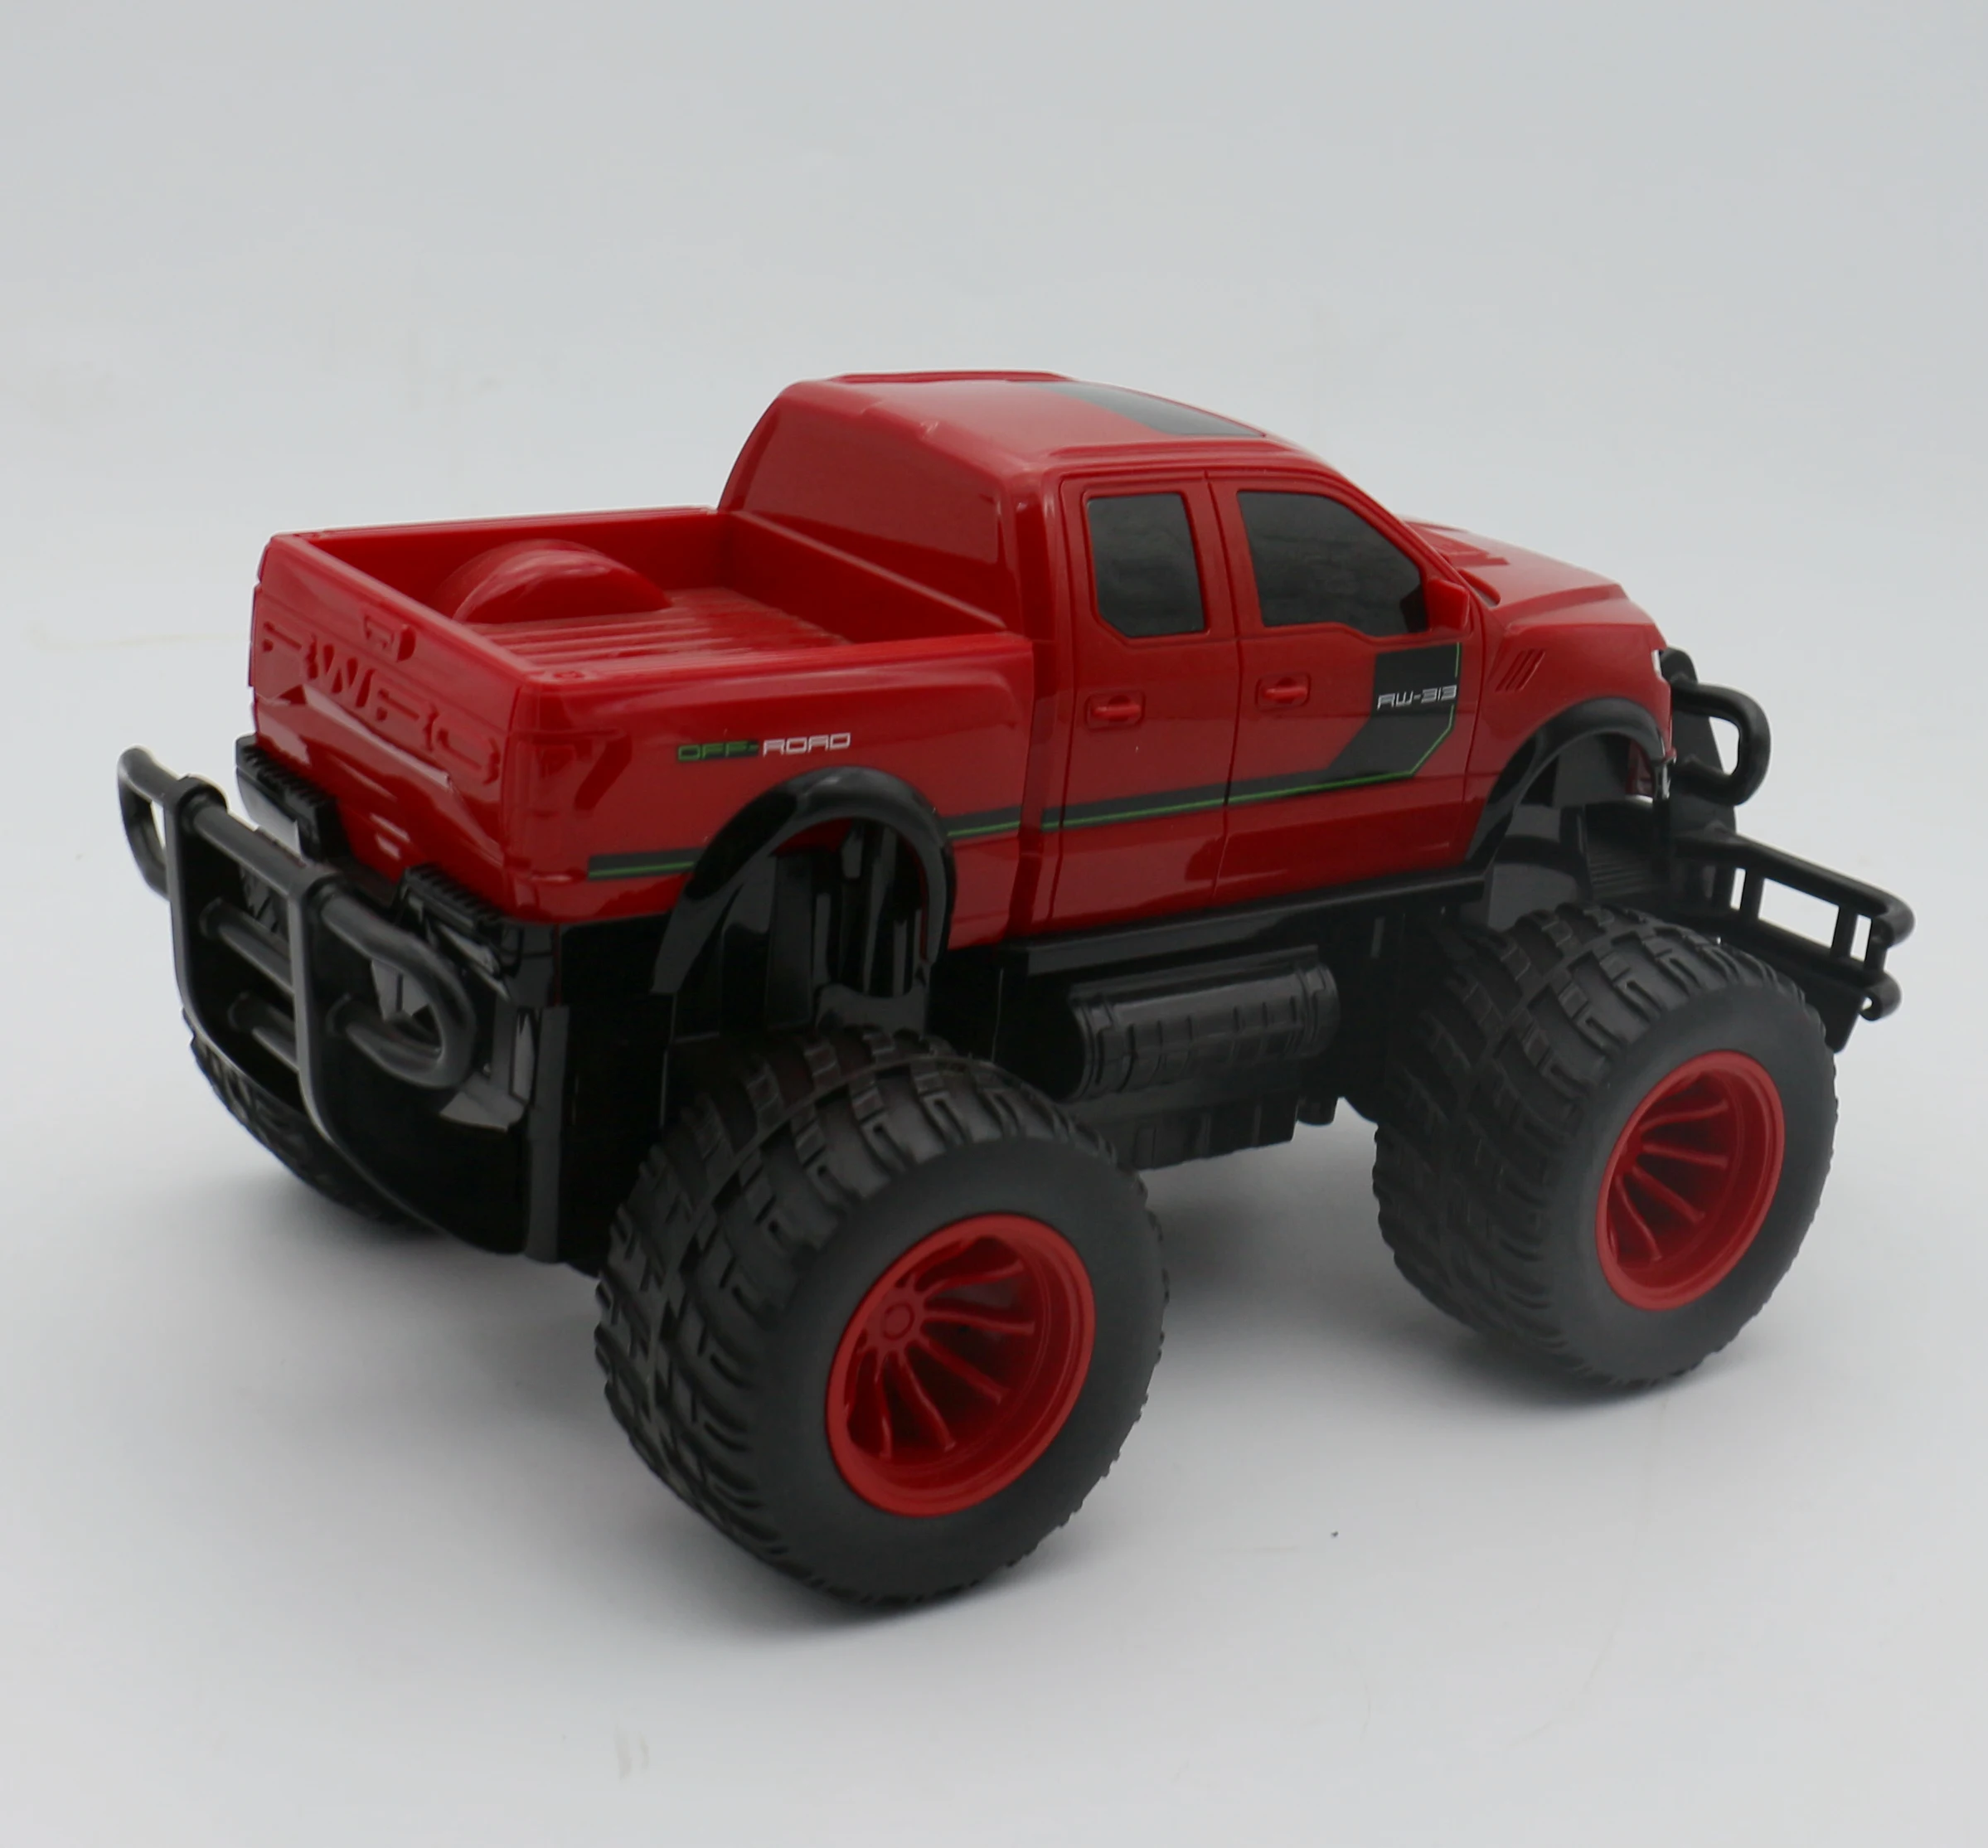 Rw 玩具b 1 16 大脚车高速车2 4g 四轮驱动遥控车rtr 儿童礼品玩具 Buy High Speed Car Truck 1 16 Monster Car Kids Gift Toys Product On Alibaba Com